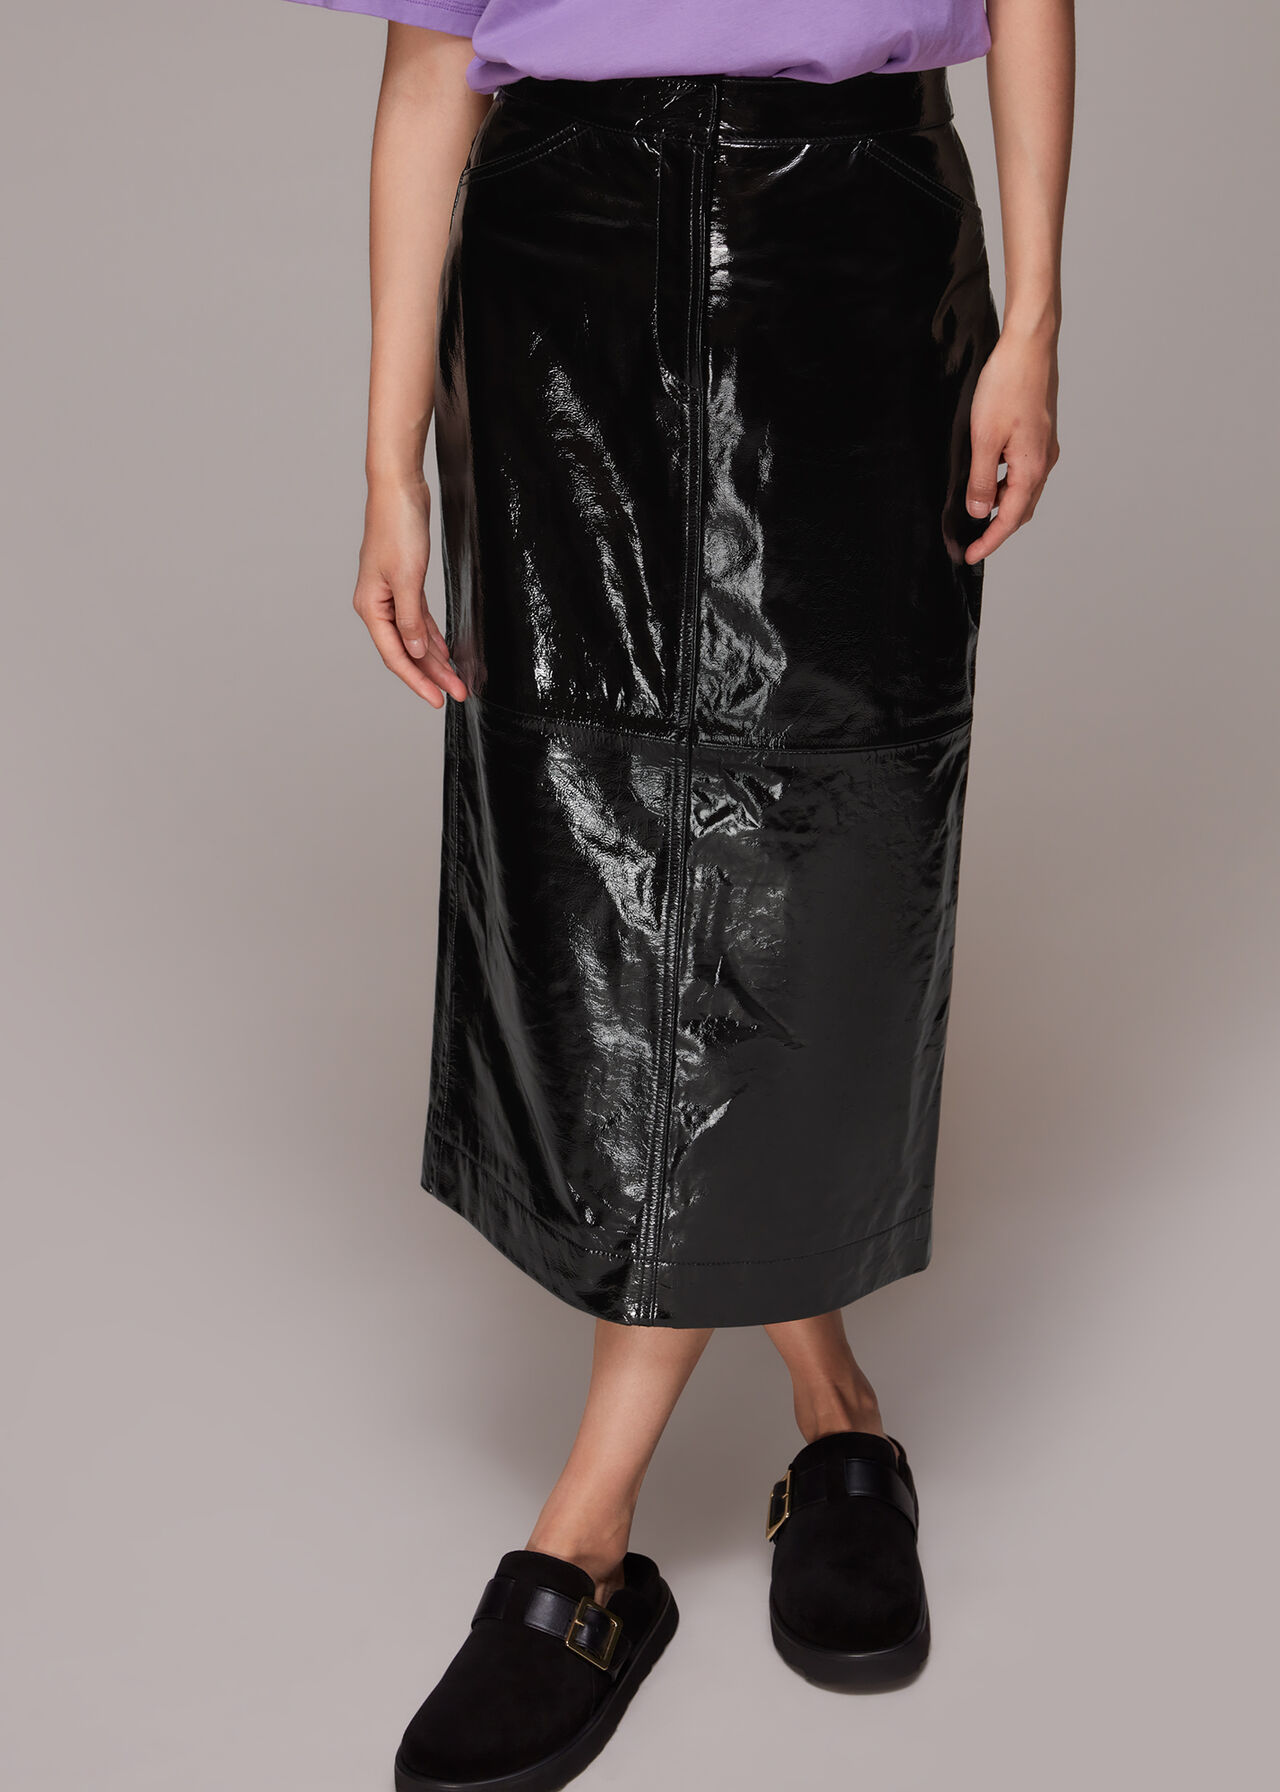 Rachel Patent Leather Skirt